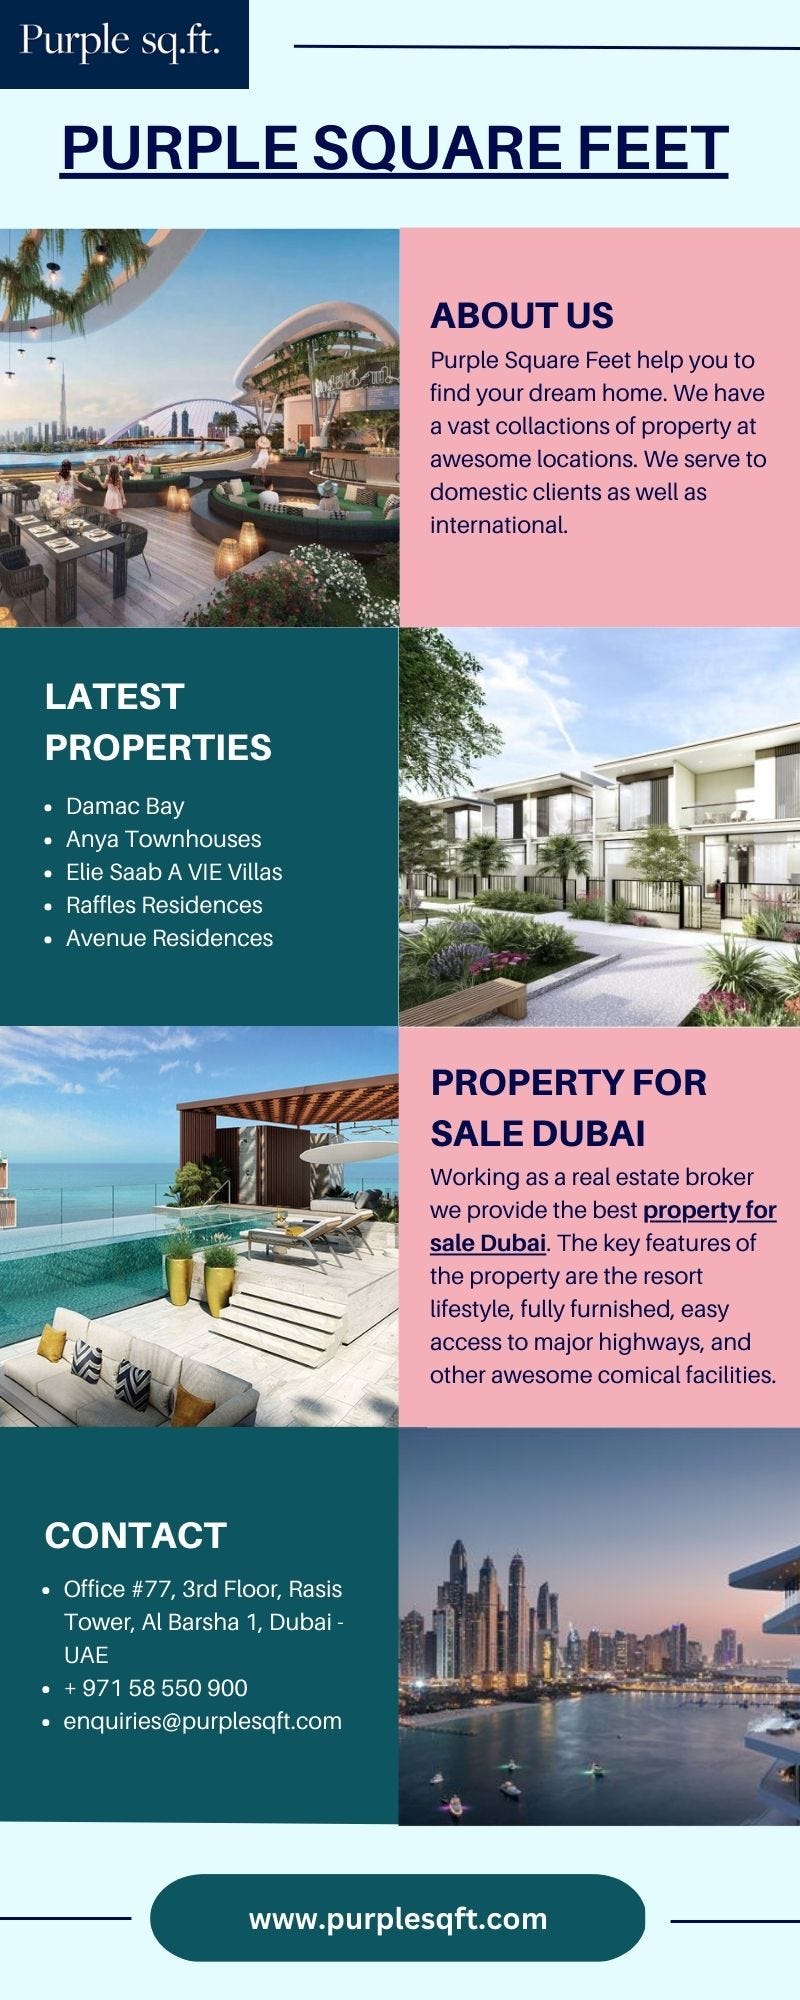 Looking For Property For Sale Dubai? - Purplesqft - Medium